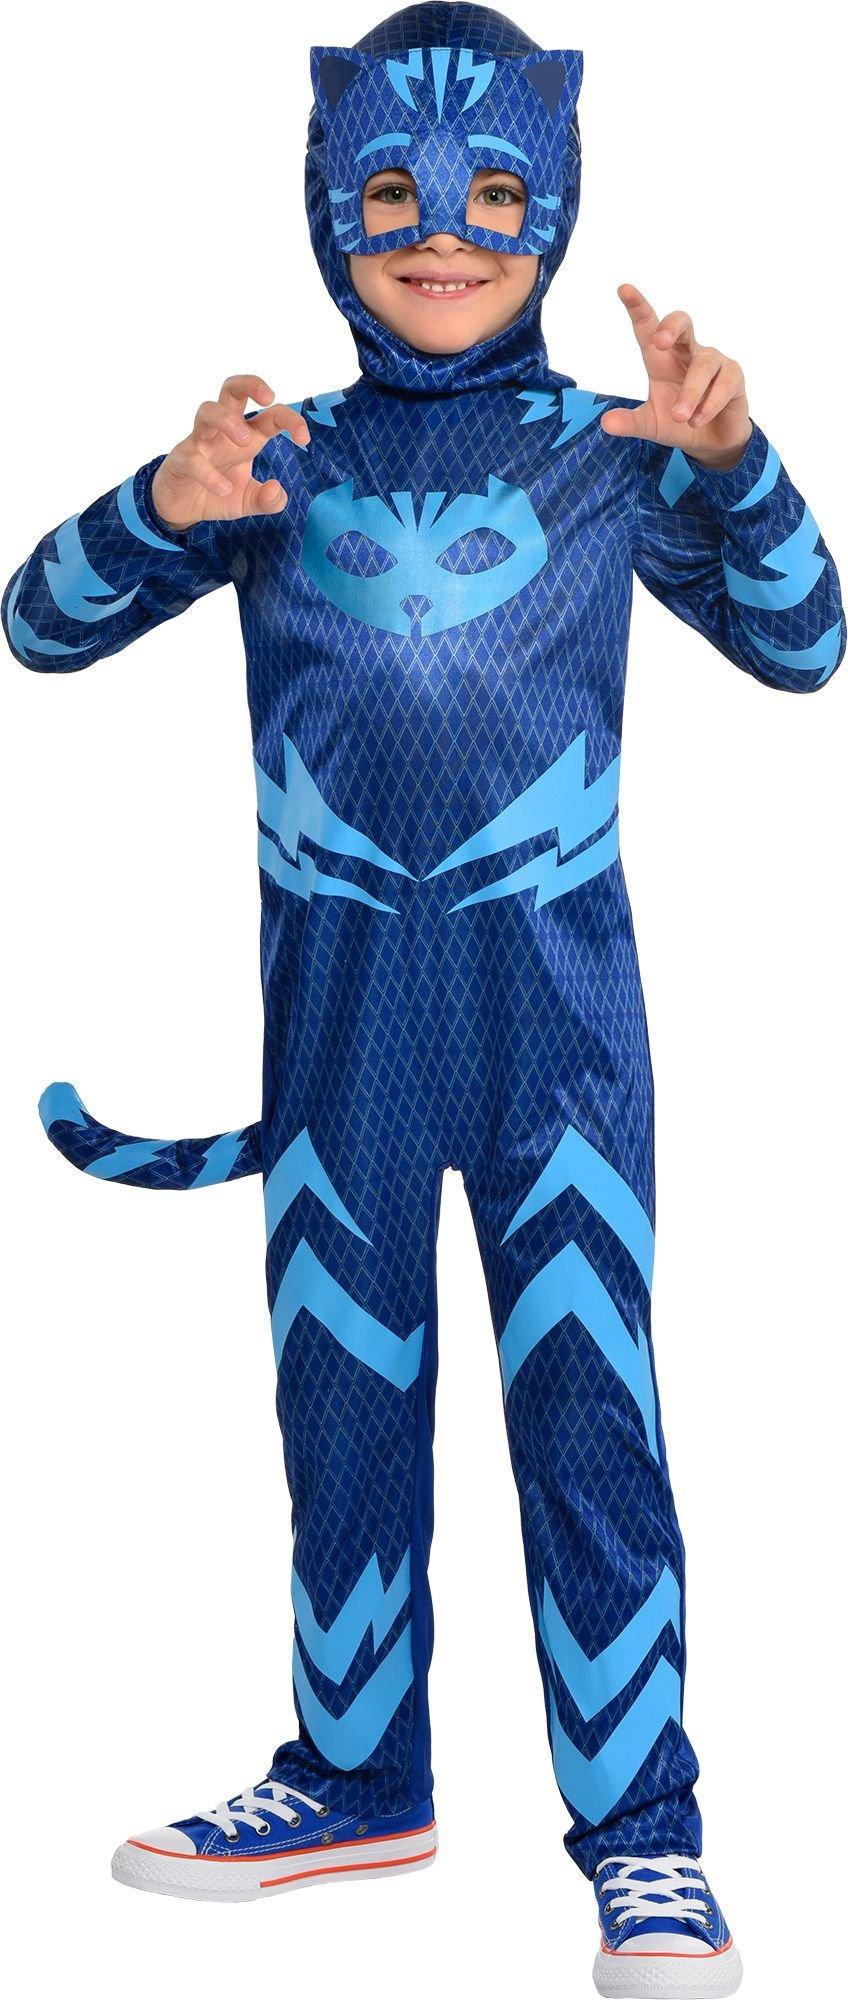 Kids' Catboy Costume - PJ Masks